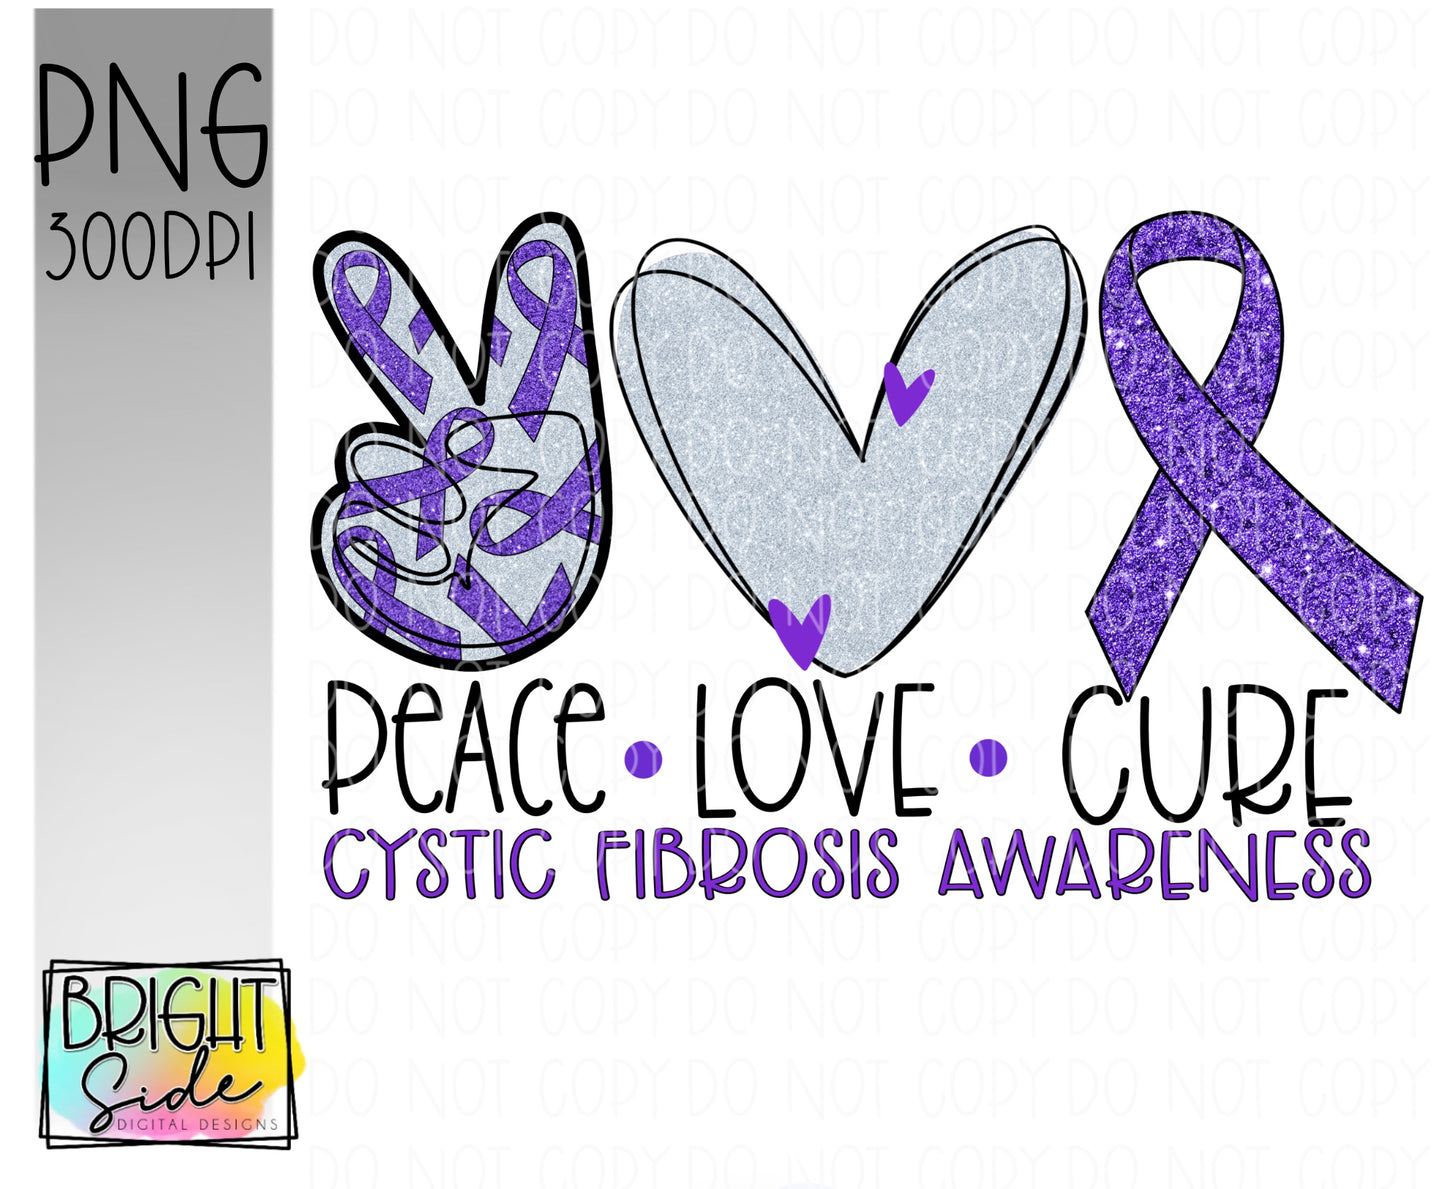 Peace Love Cure Cystic Fybrosis Awareness